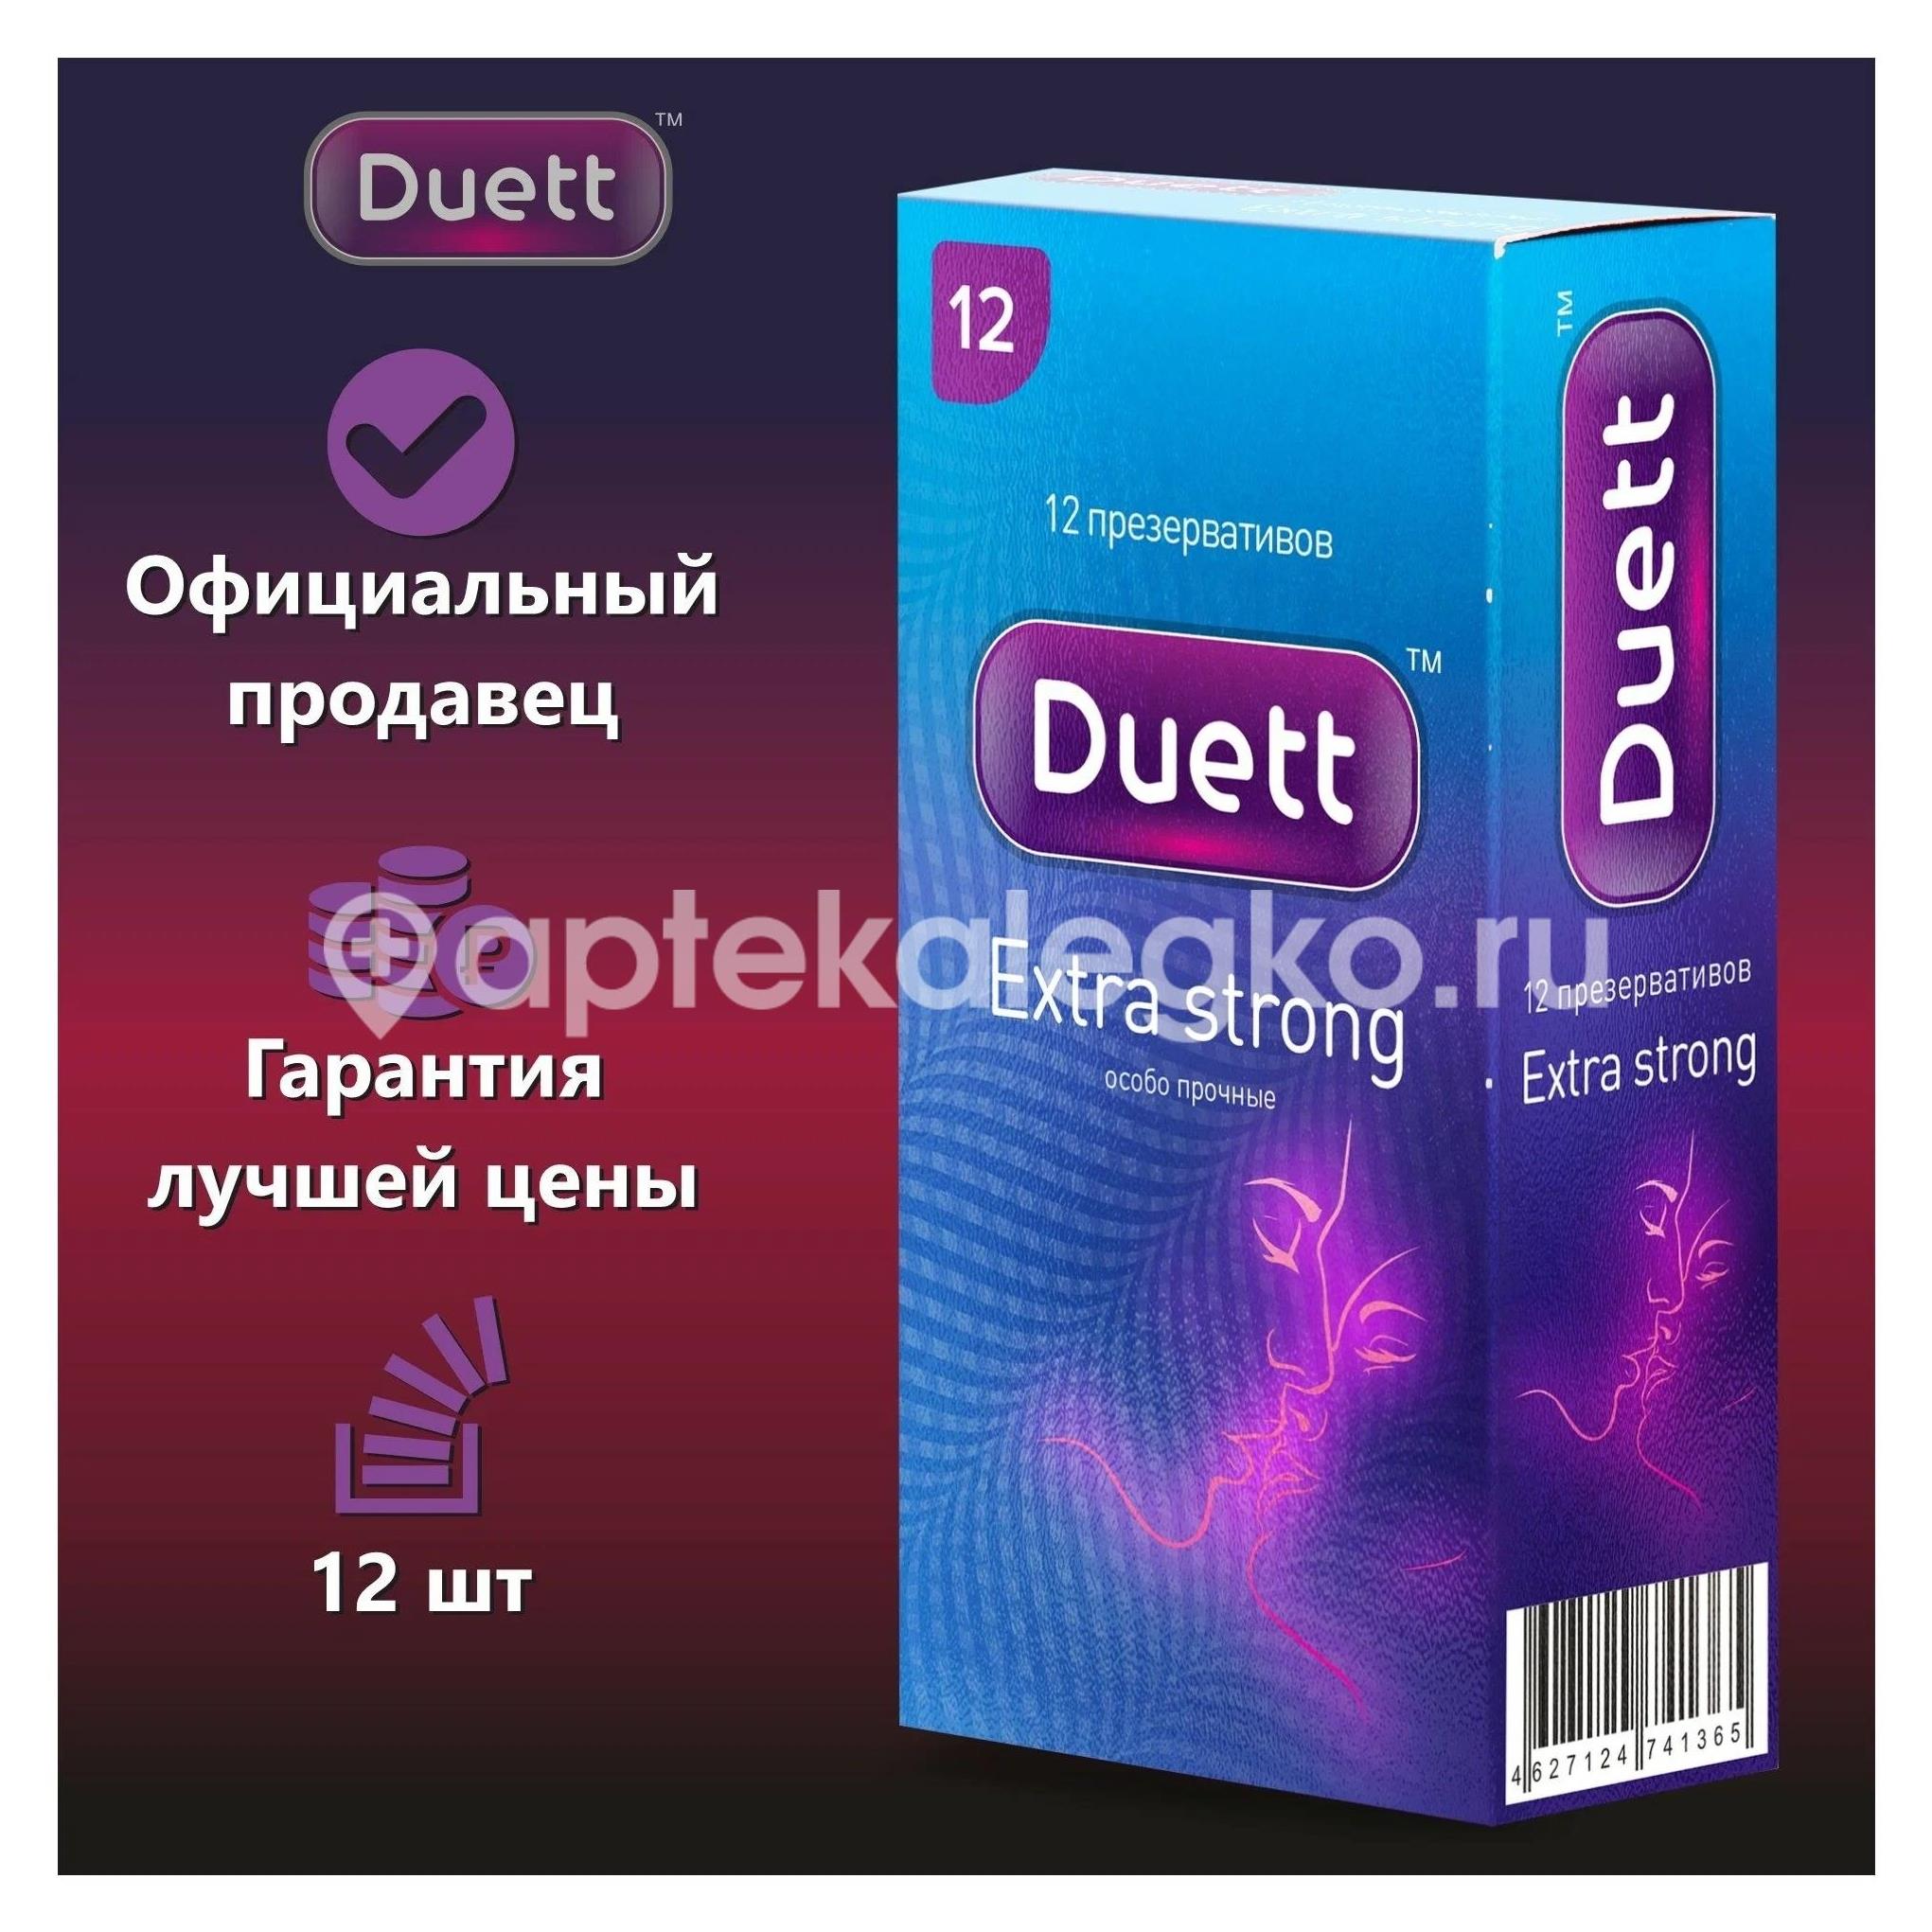 Duett extra strong презервативы особо прочные 12 шт. [duett] - 4